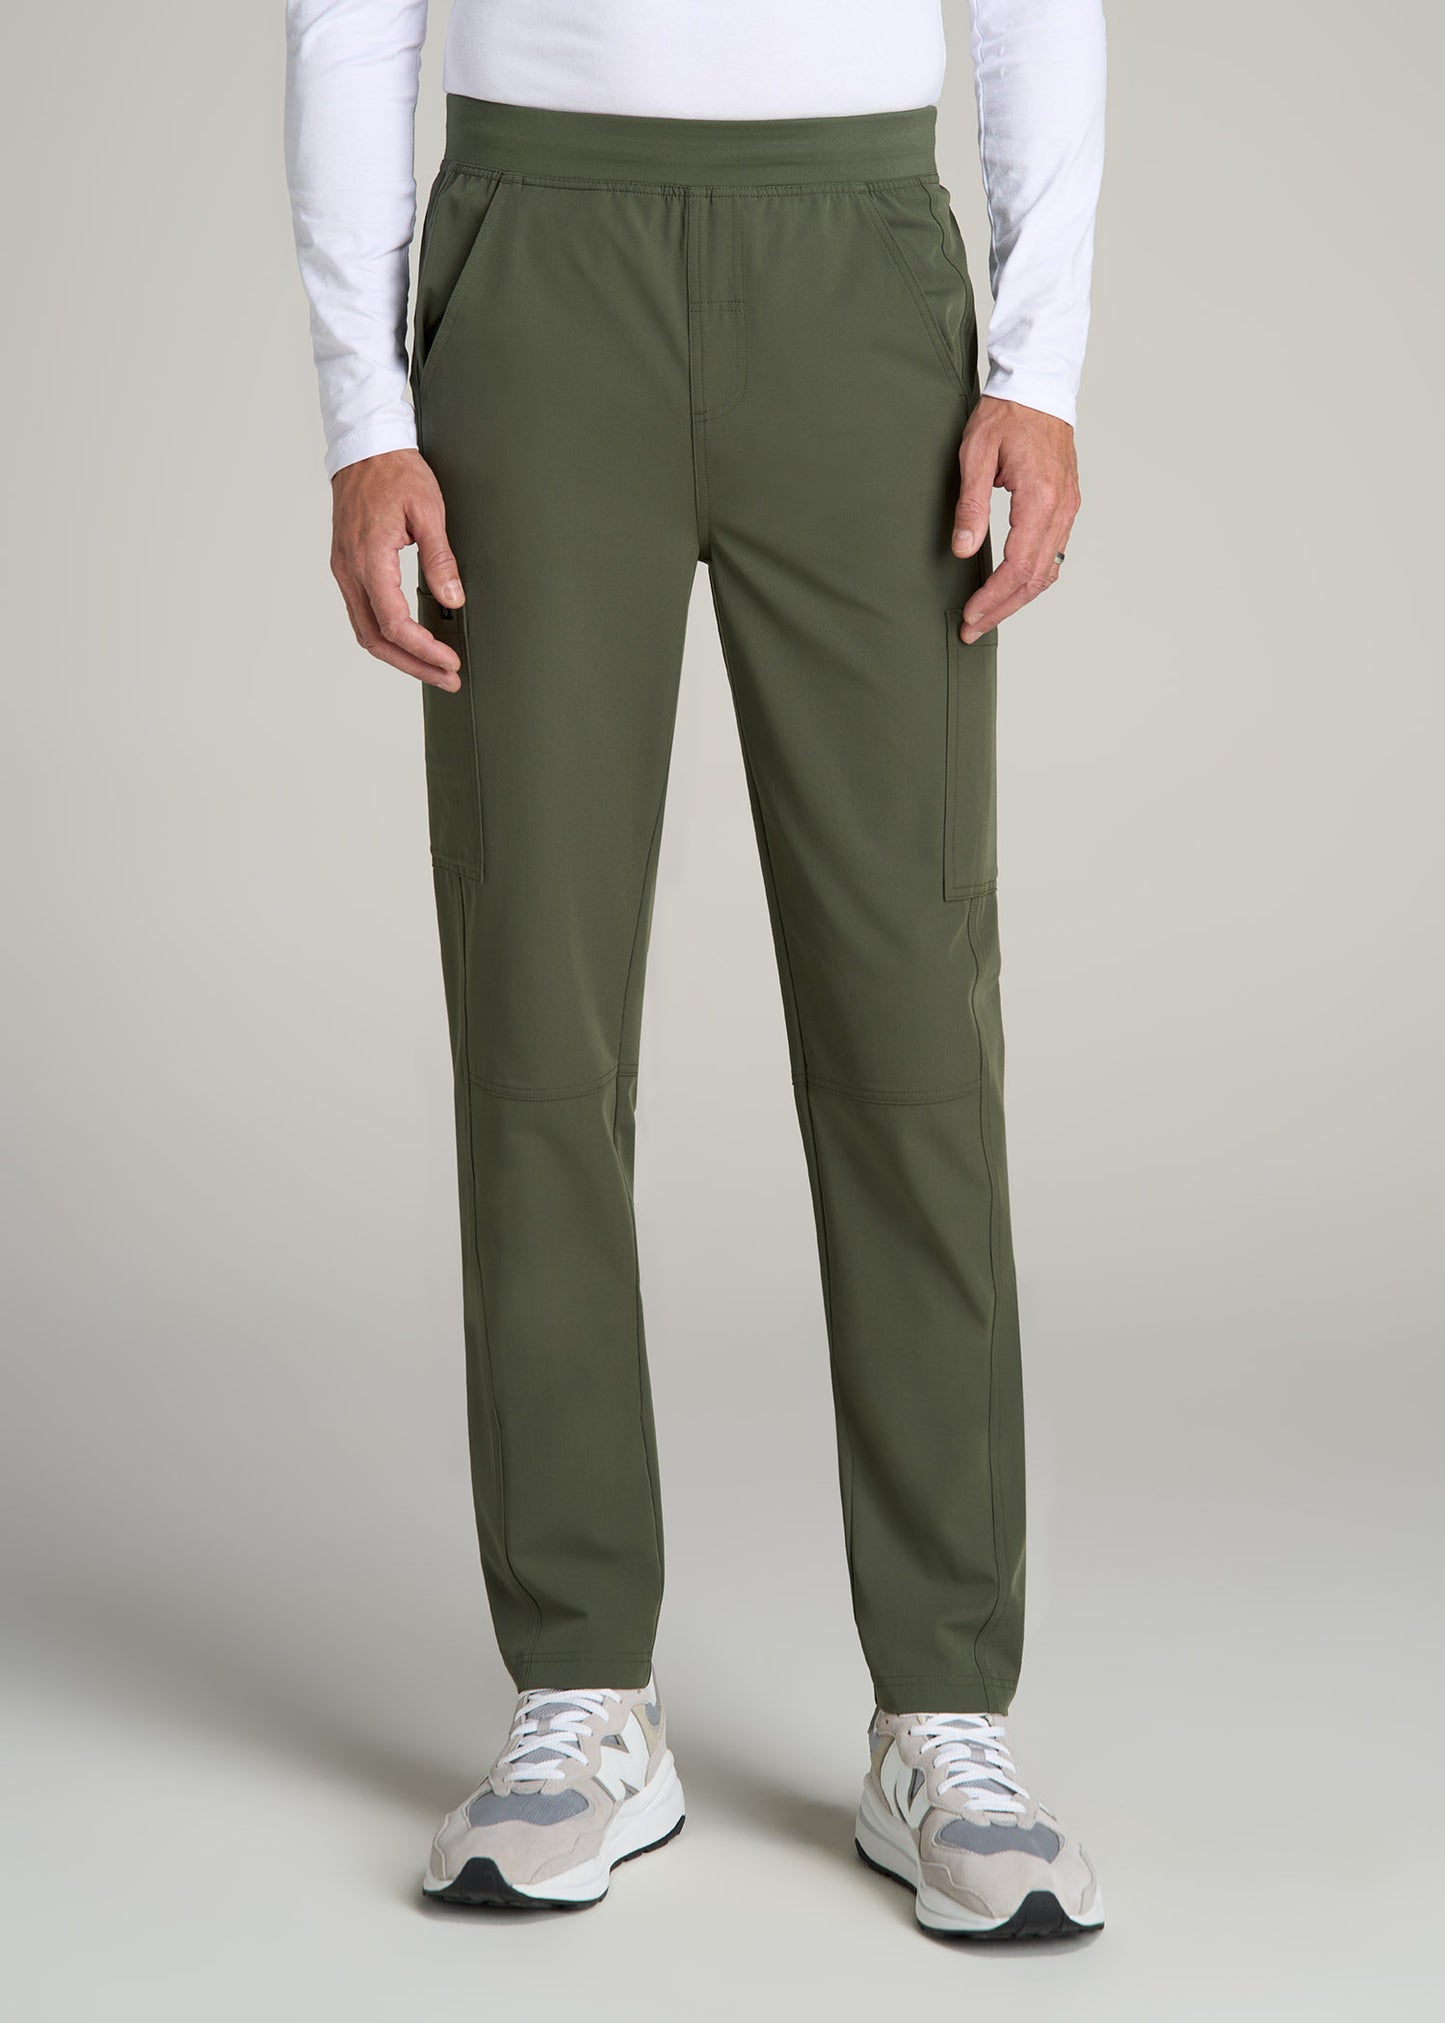 Cargo Scrub Pants for Tall Men in Clover Green